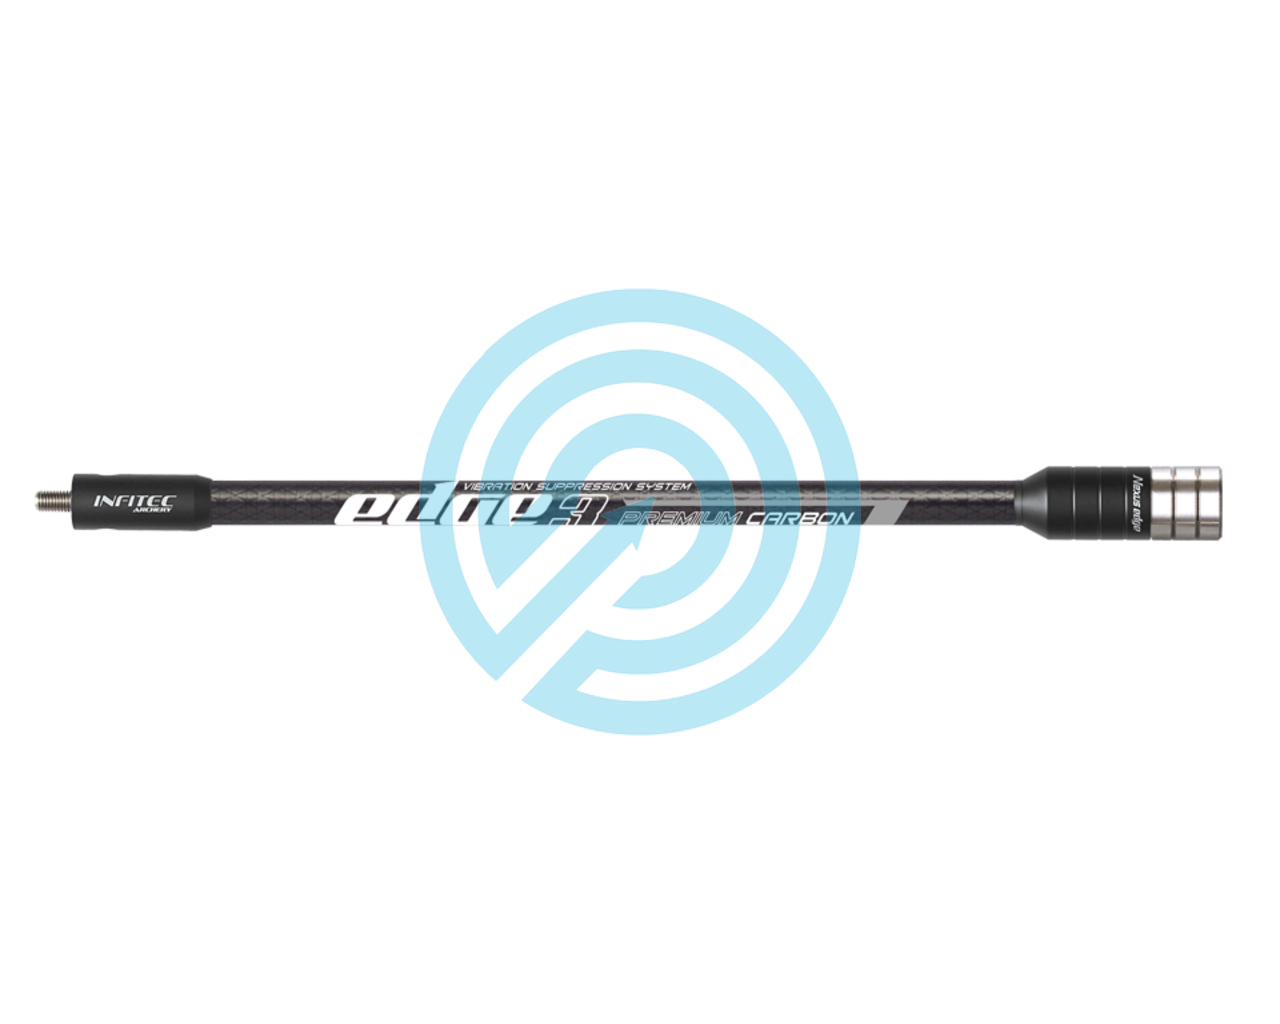 Stabilisateur latéral Nexus edge 3 - Infitec Archery